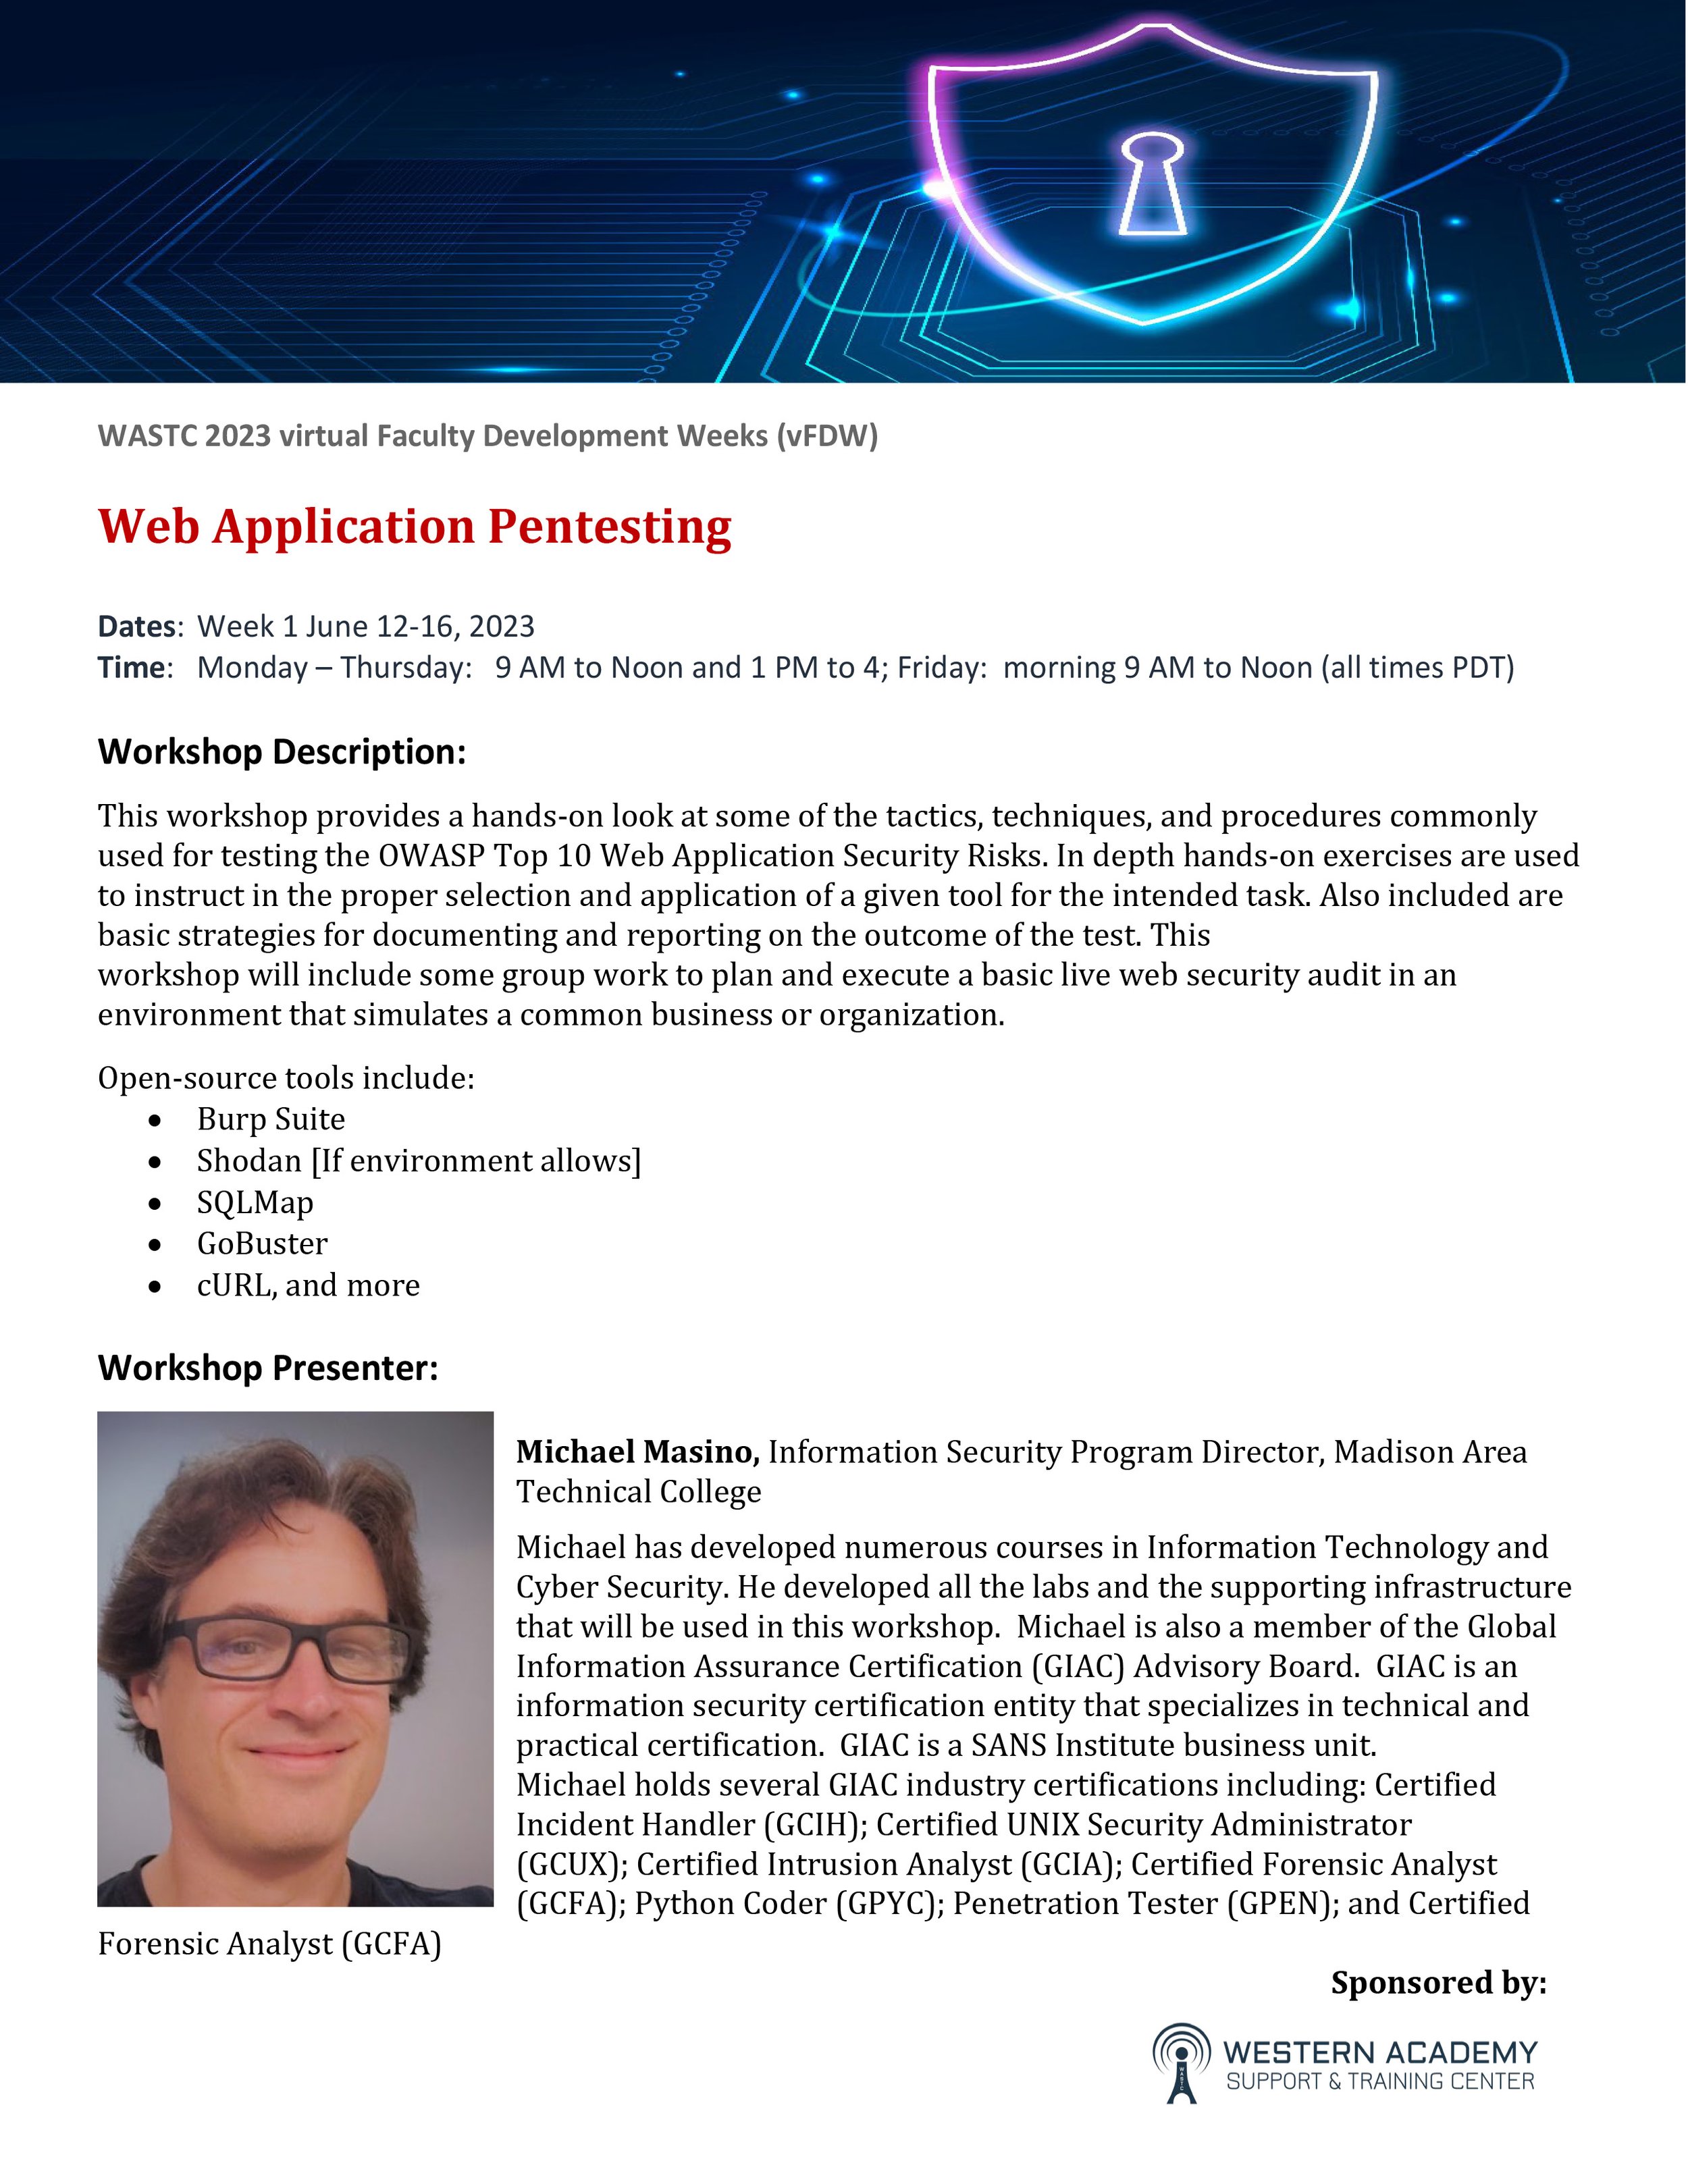 1A - Web Application Pentesting